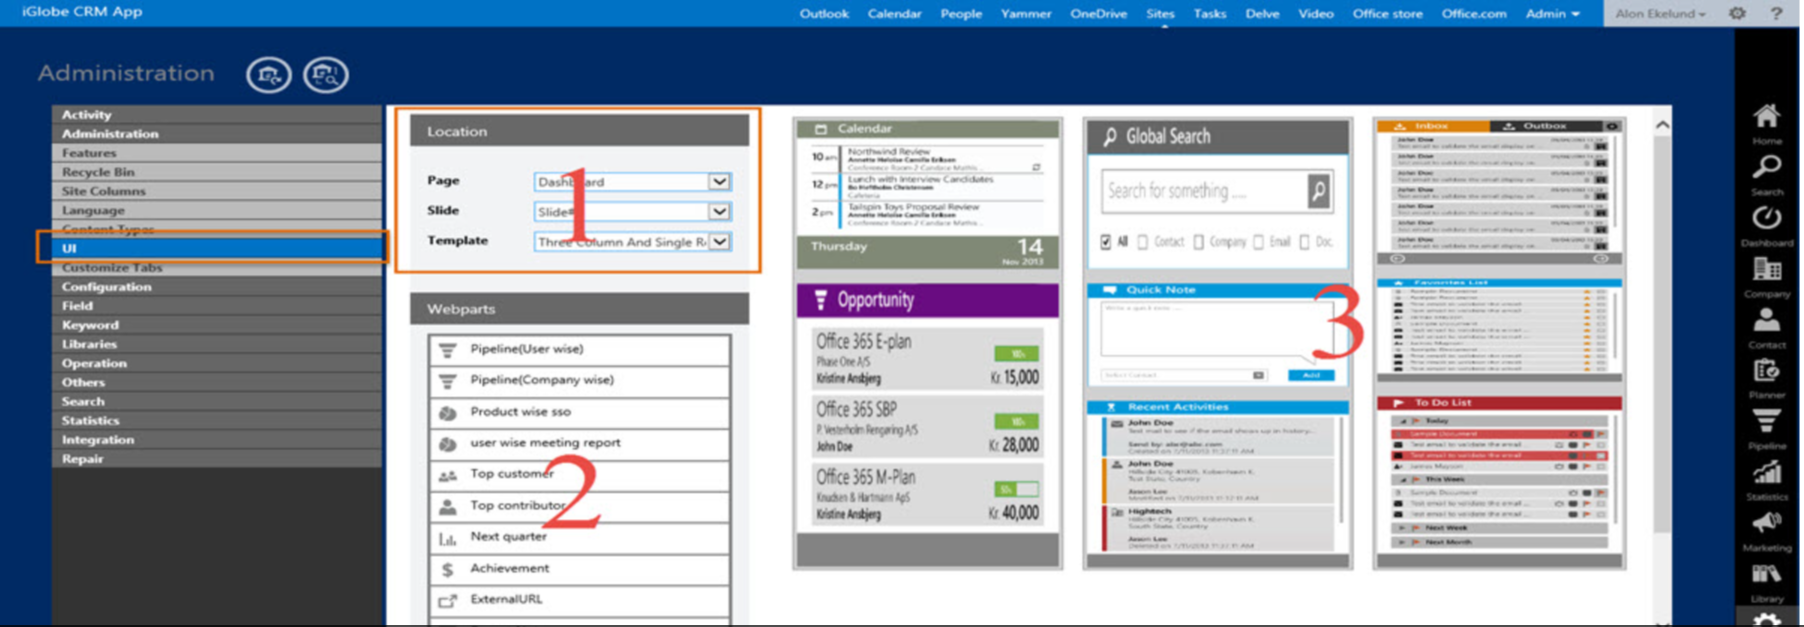 iGlobe CRM for Office 365 dashboard